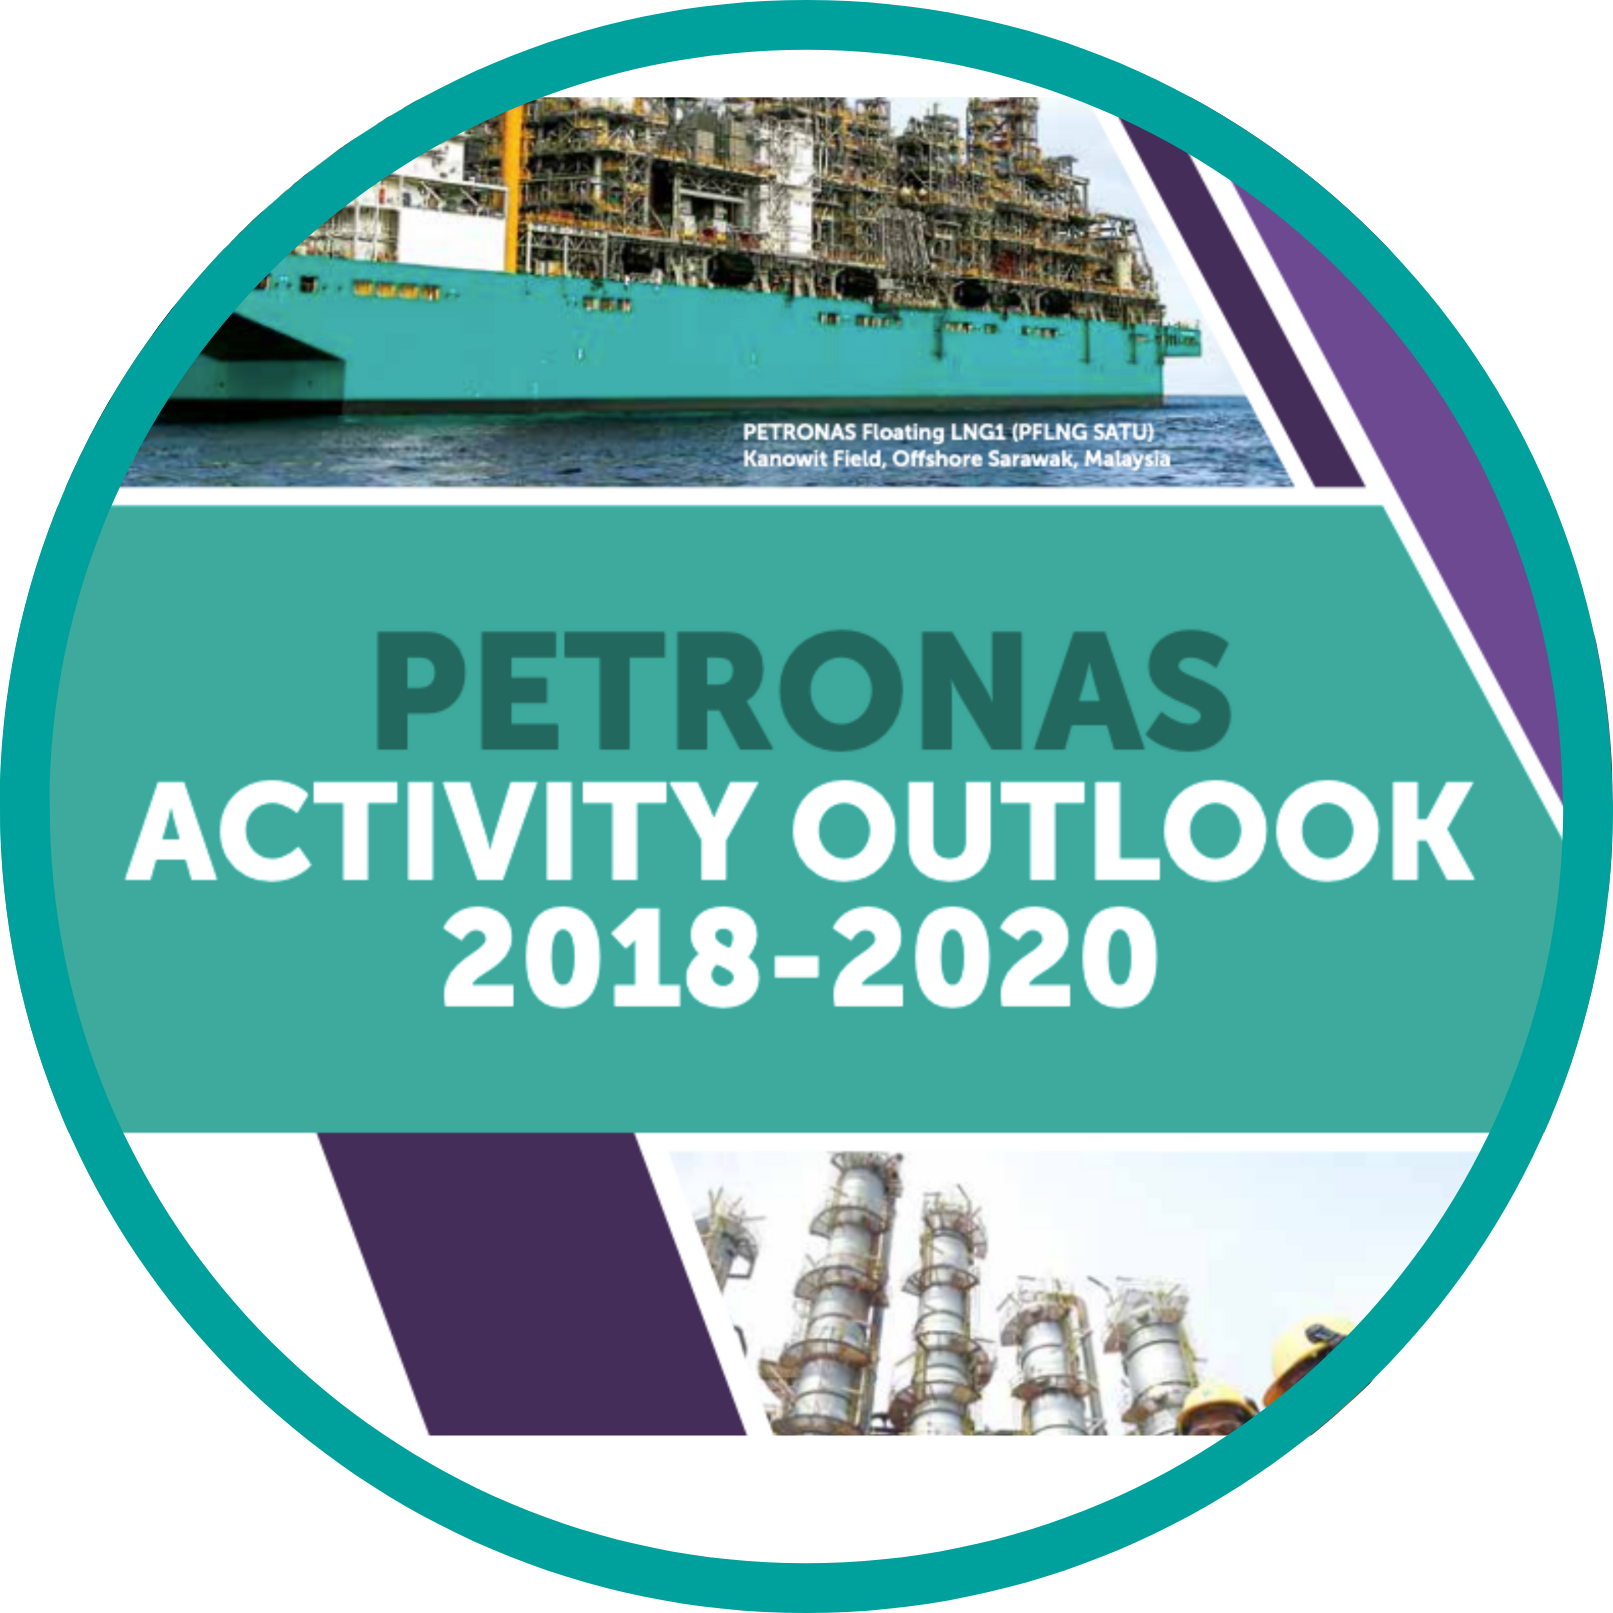 "PETRONAS Activity Outlook 2018-2020"